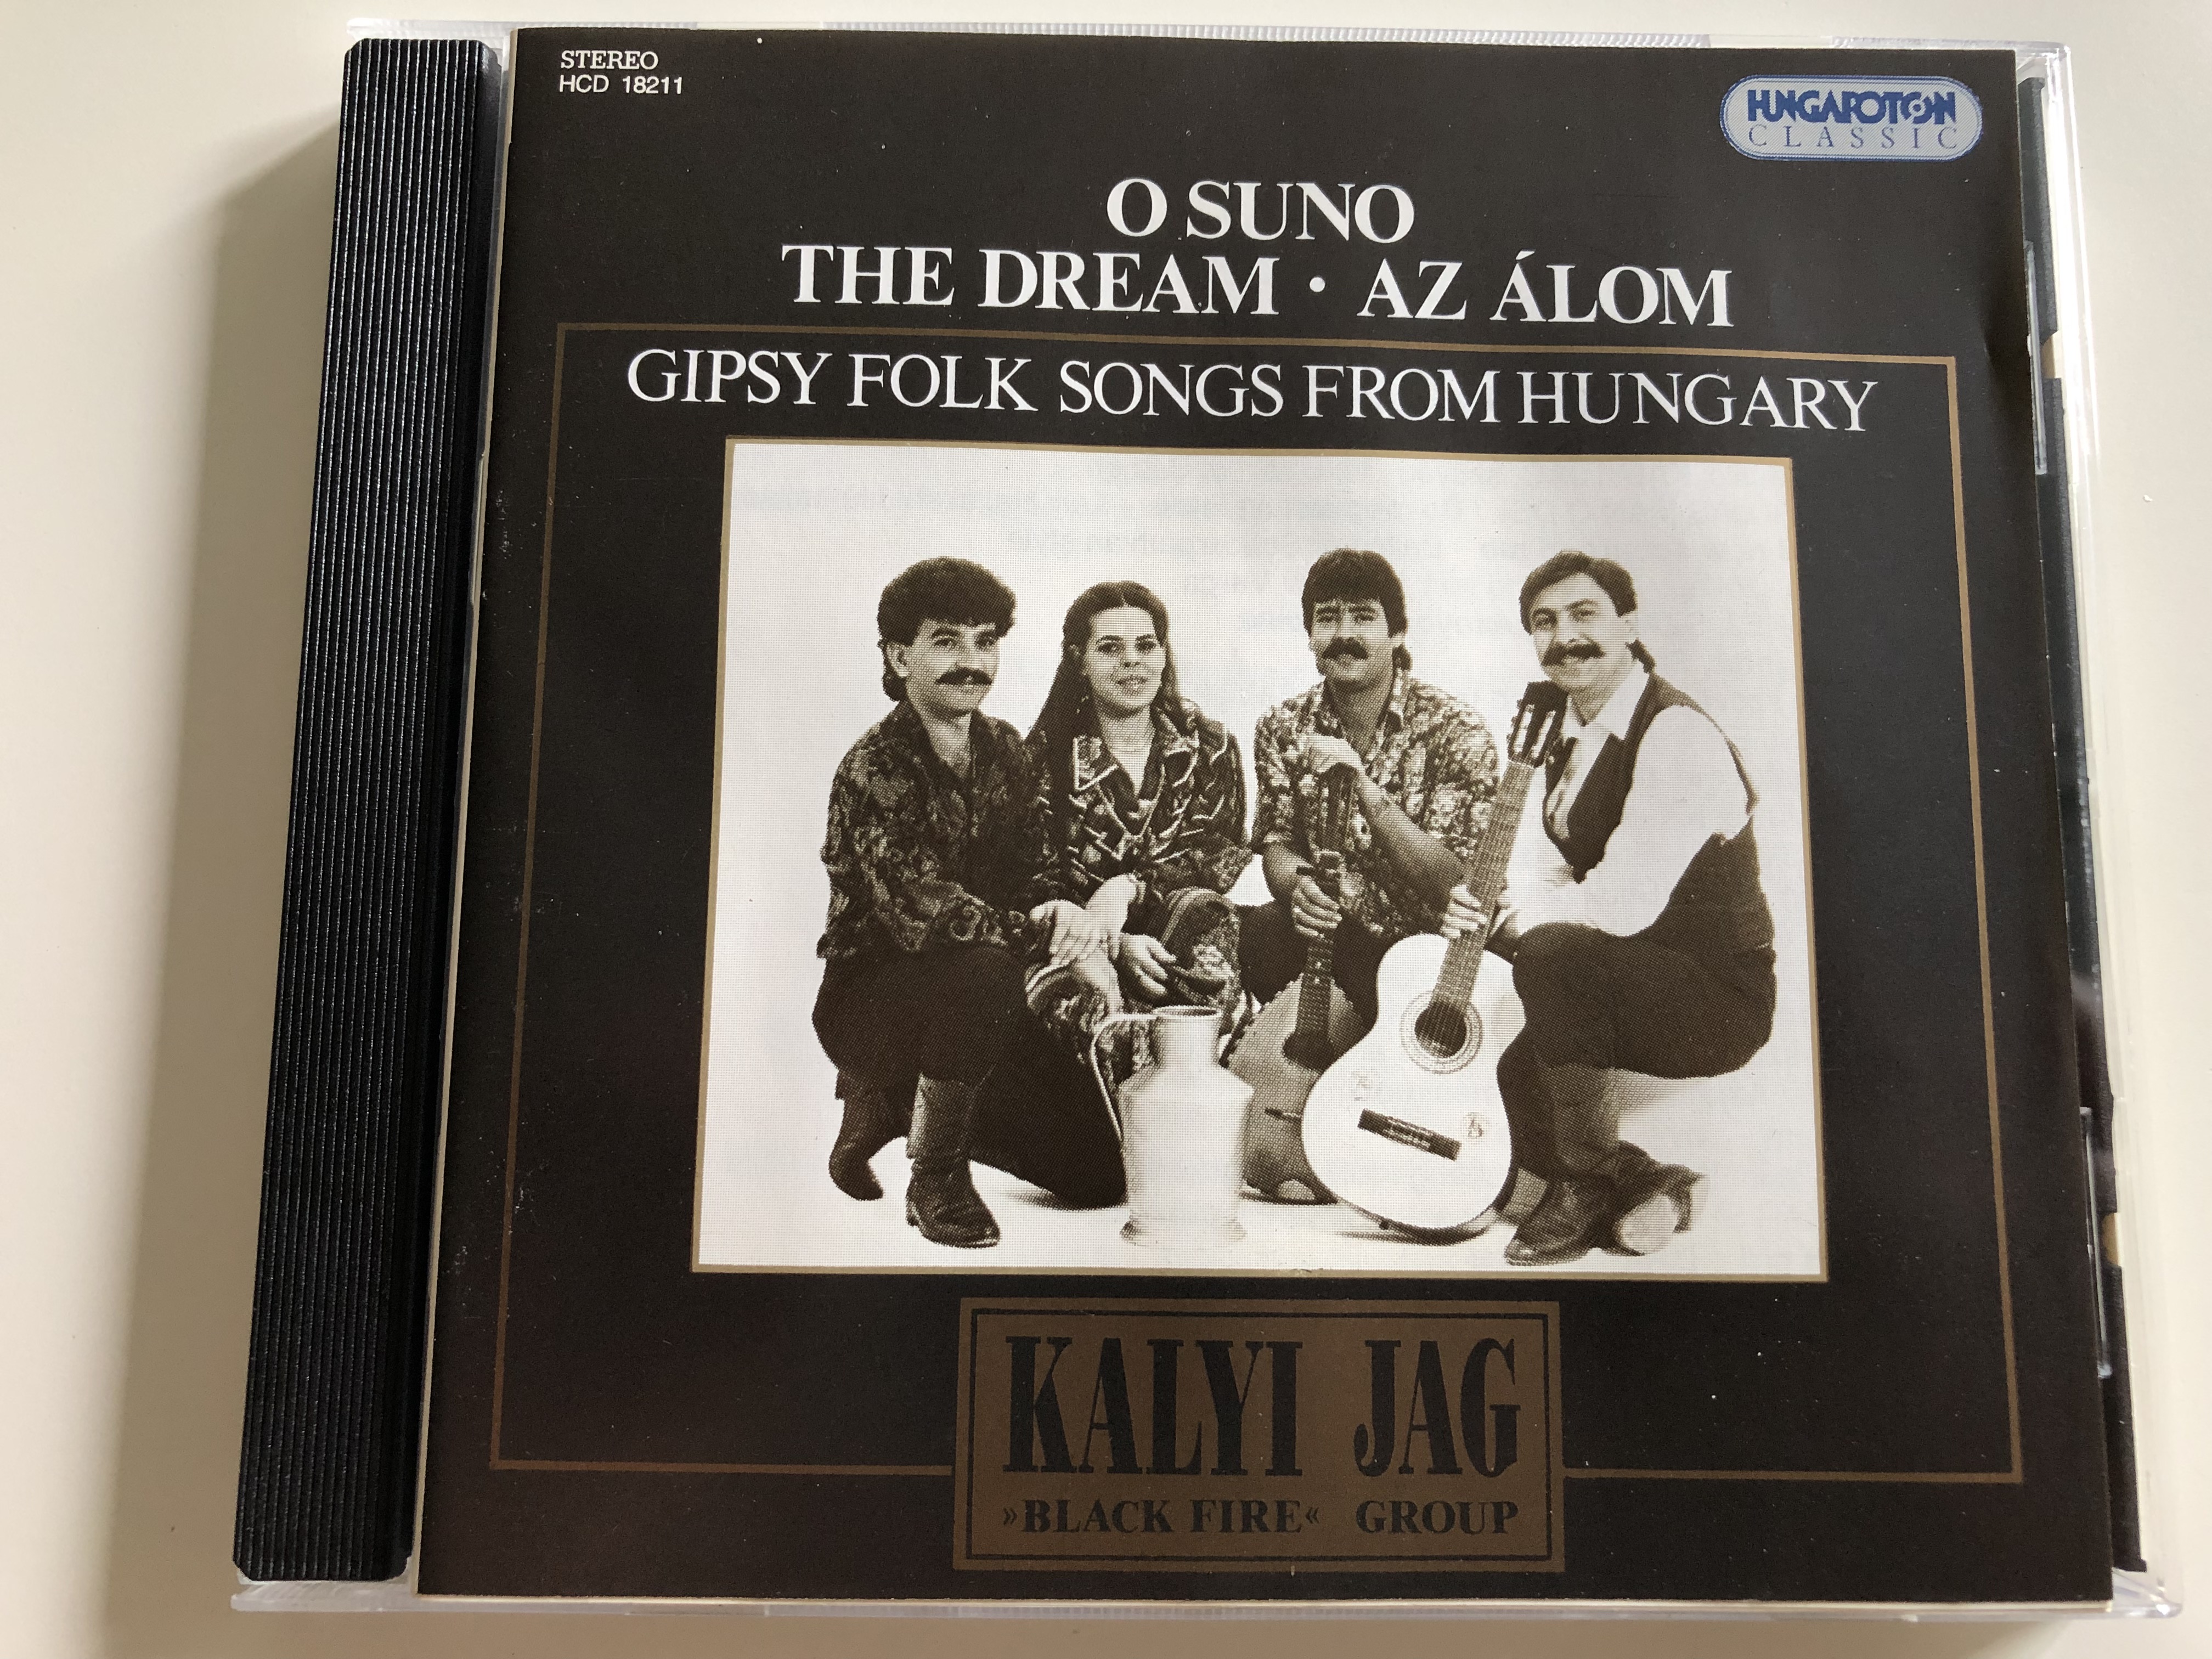 kalyi-jag-black-fire-o-suno-the-dream-az-lom-gipsy-folk-songs-from-hungary-hungaroton-classic-audio-cd-1995-hcd-18211-audio-cd-1-.jpg